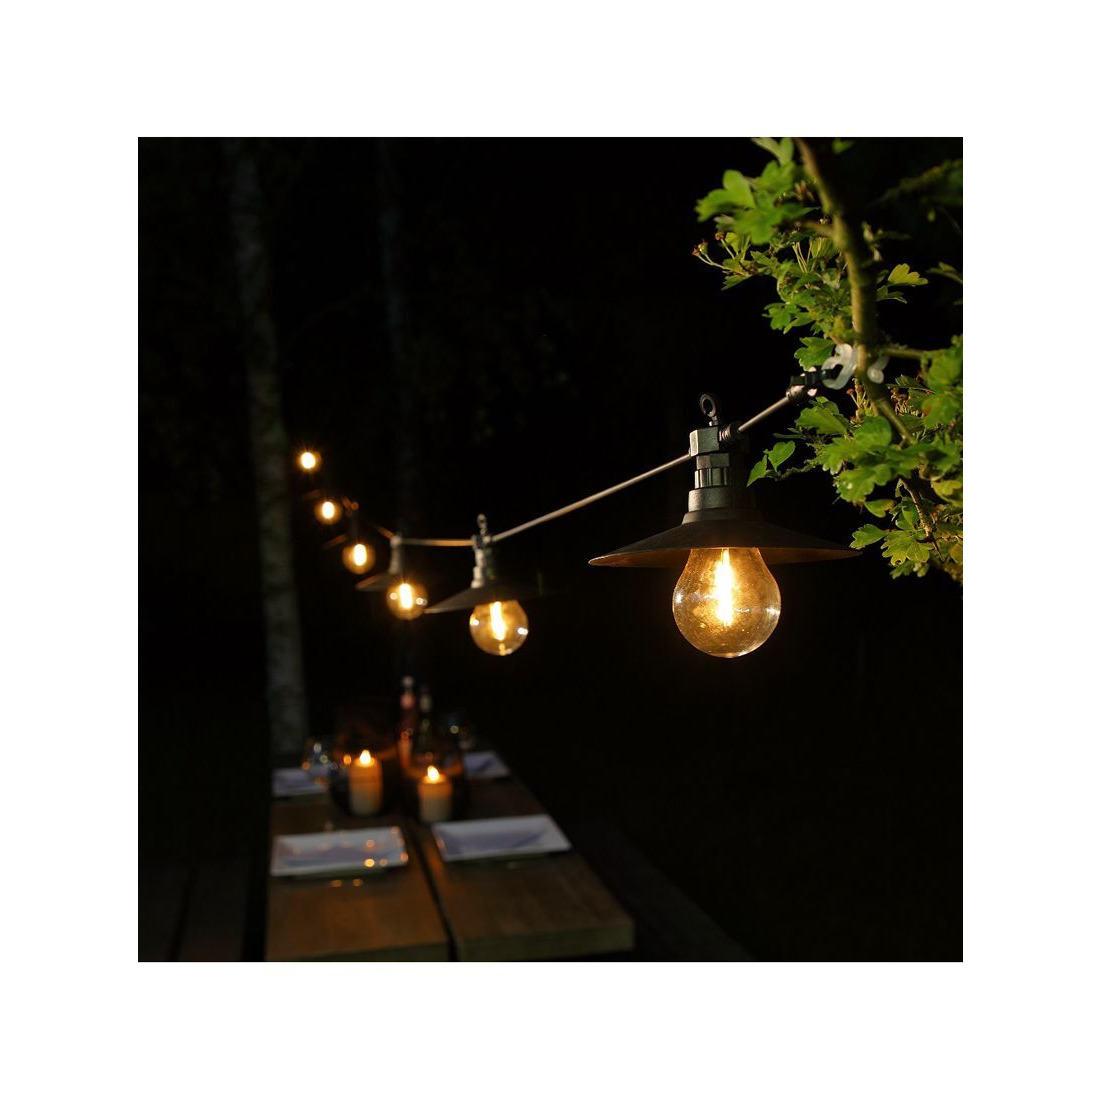 NOMA 6 Saucer Festoon Outdoor String Light, Warm White - image 1